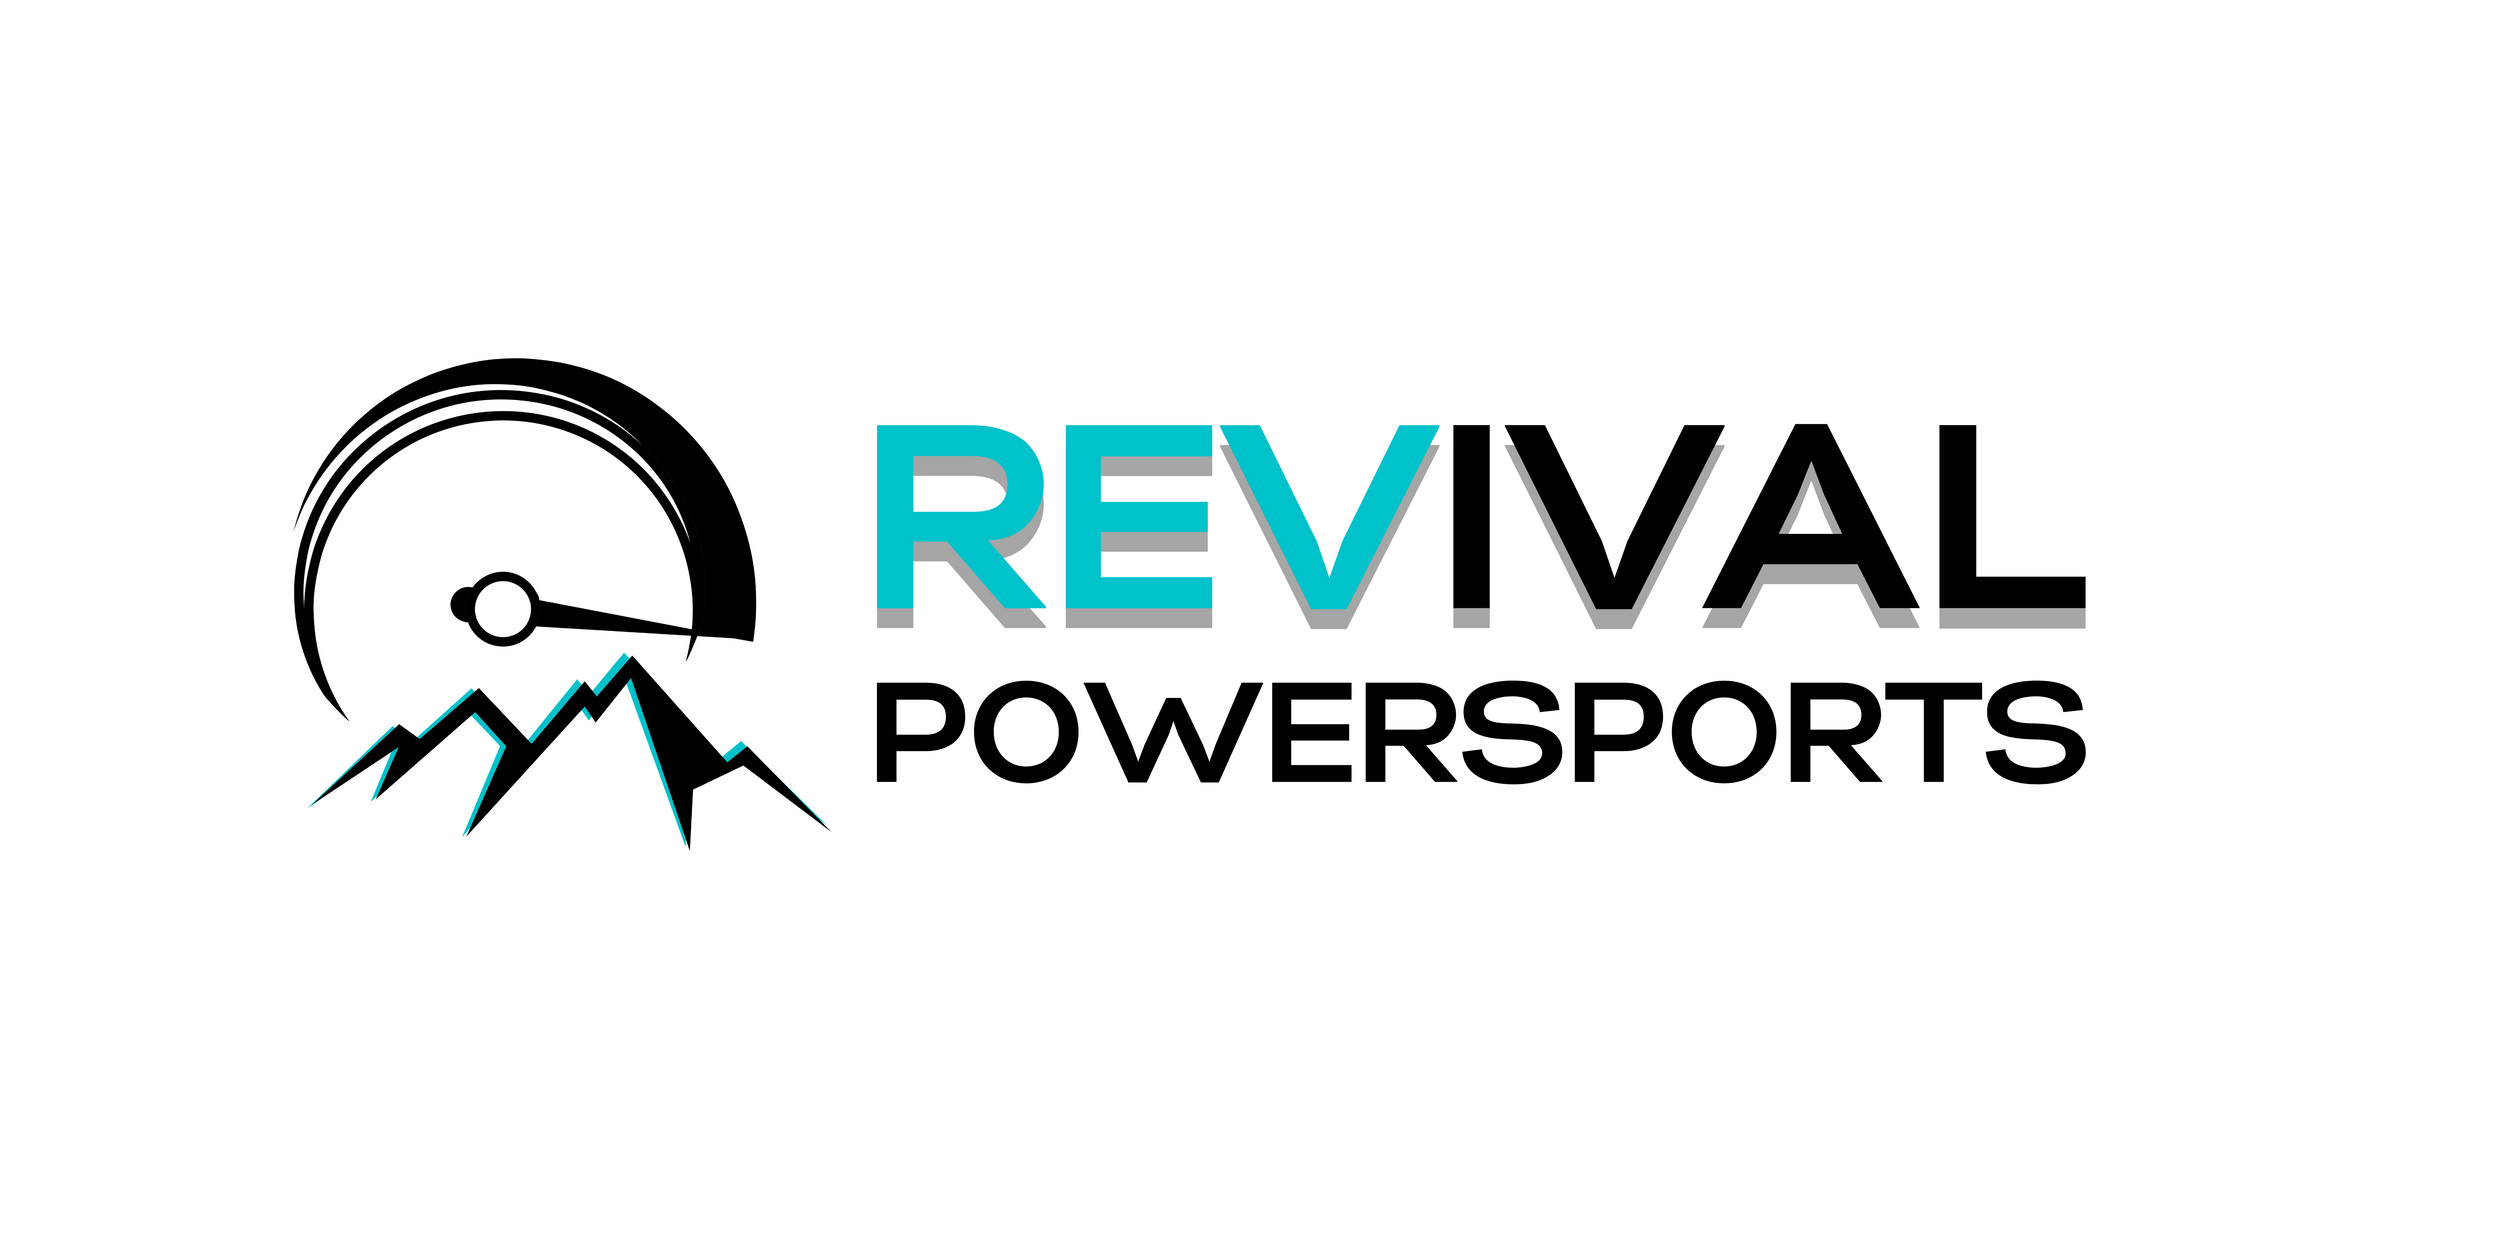 Revival Powersports logo